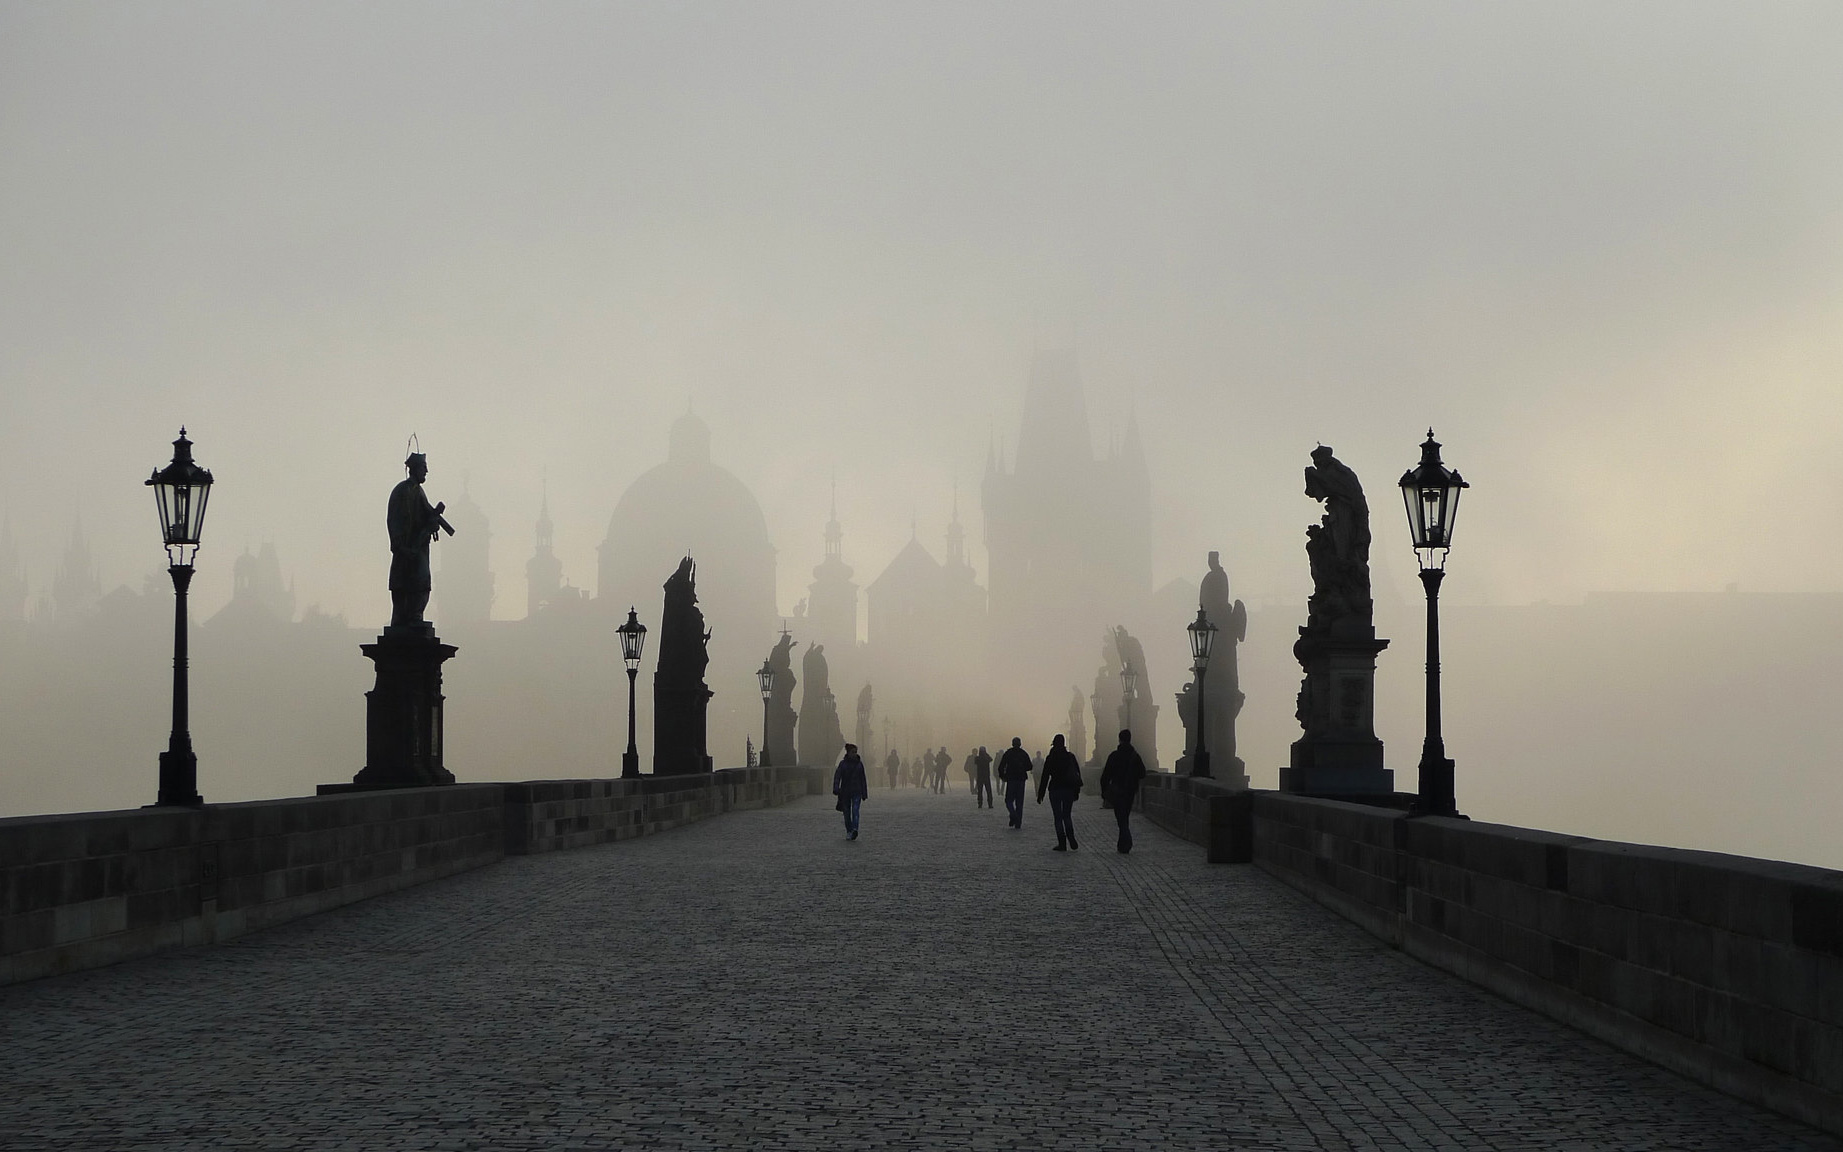 Prague: Charles Bridge in the Mist (Explored)